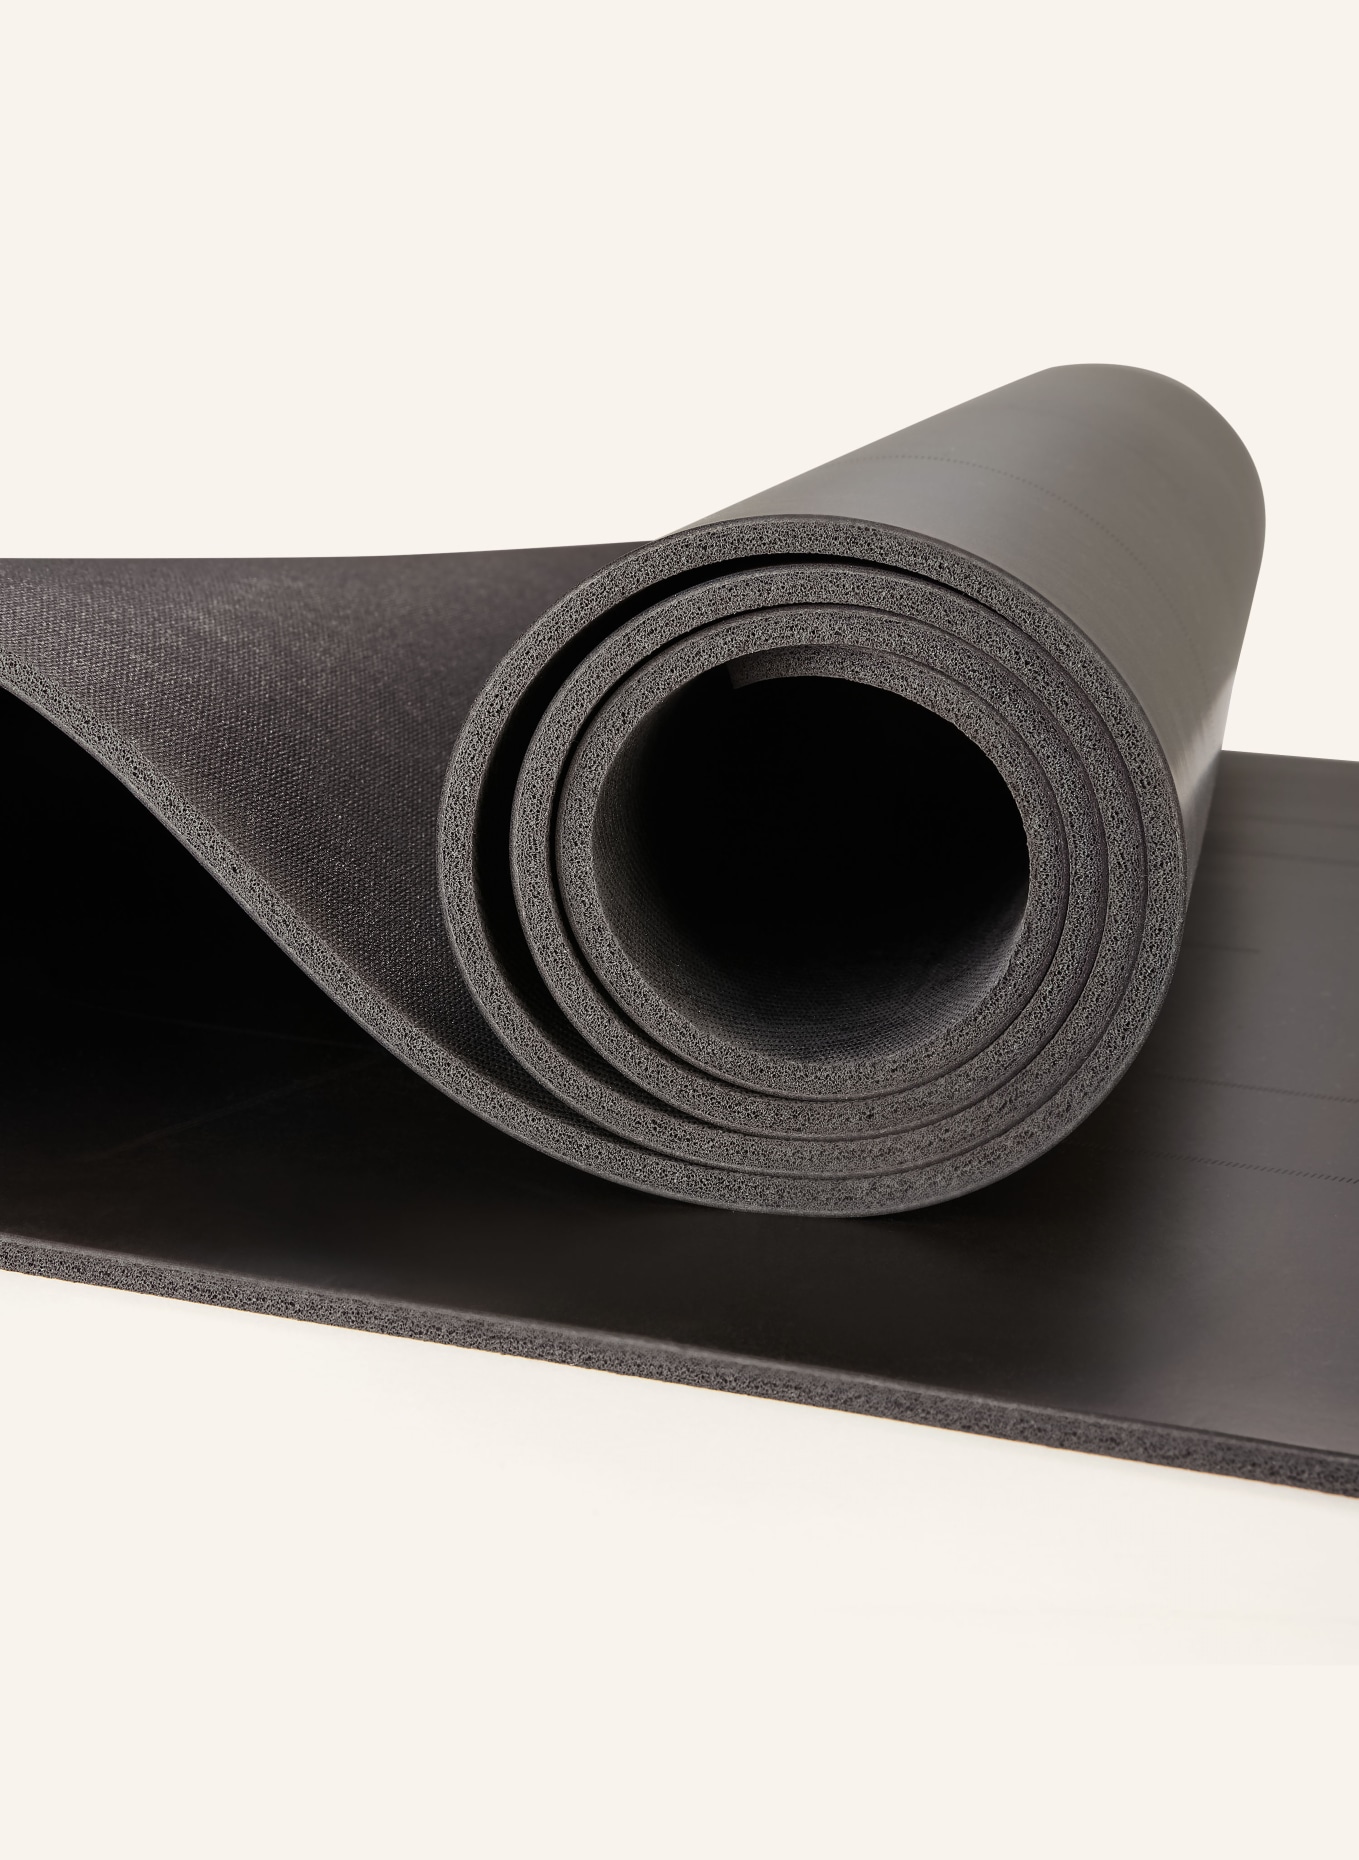 Casall - Our award winning Yoga Mat Grip&Cushion III is a real